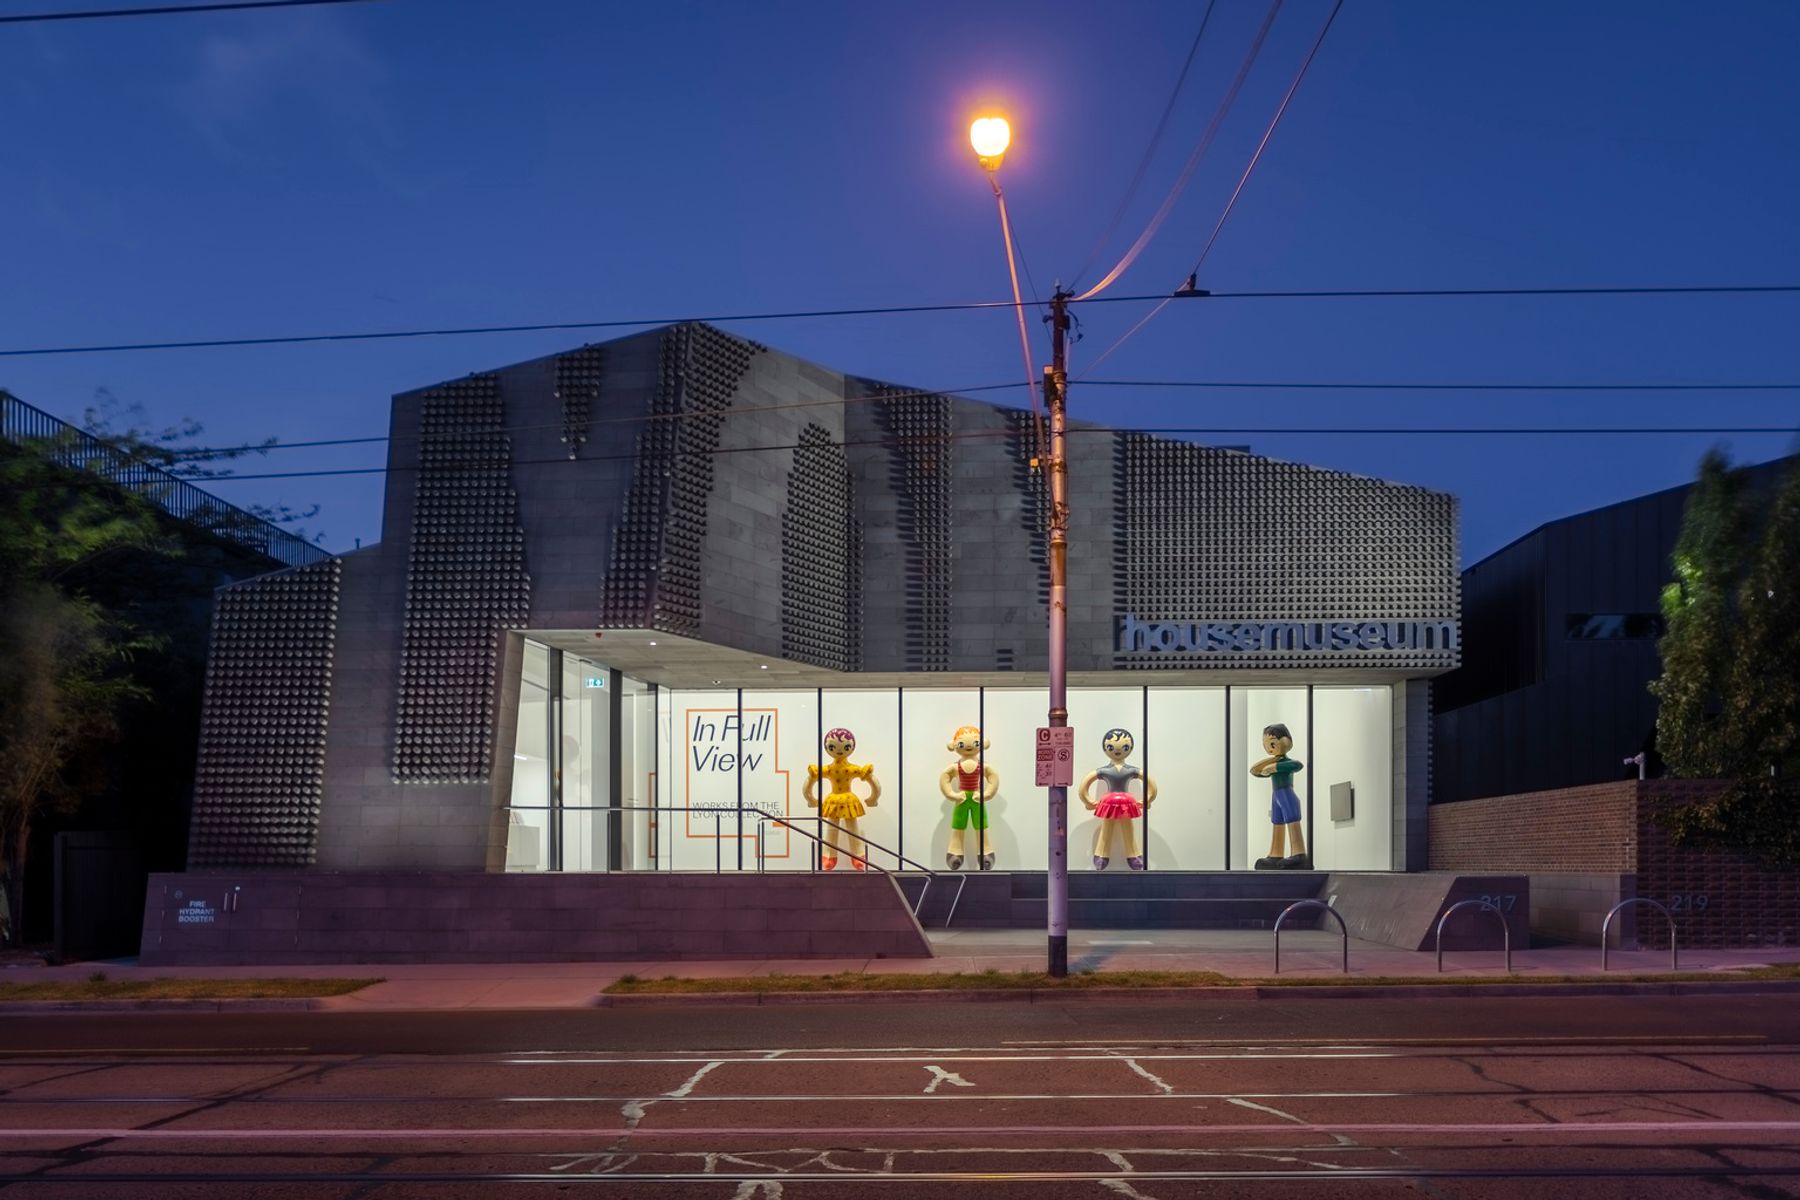 Lyon Housemuseum, Melbourne. Architecture: Lyons Architects. Photography: Jackie Chan, Sydney.